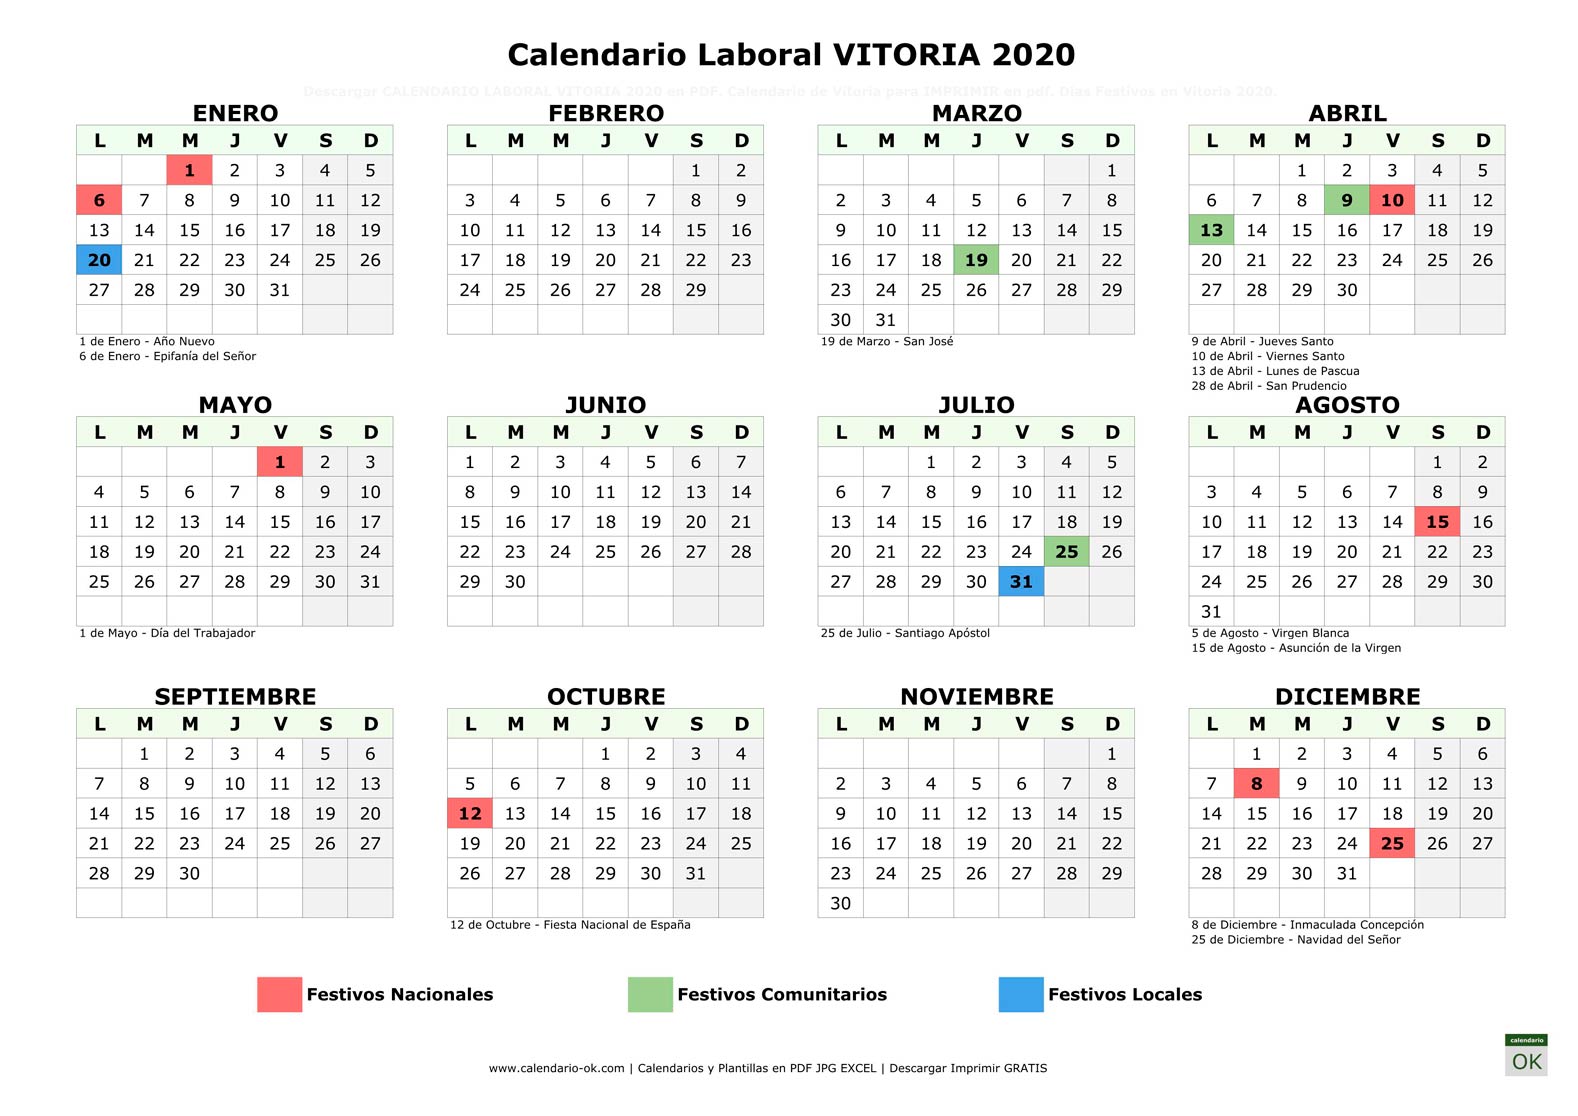 Calendario Laboral VITORIA 2020 horizontal